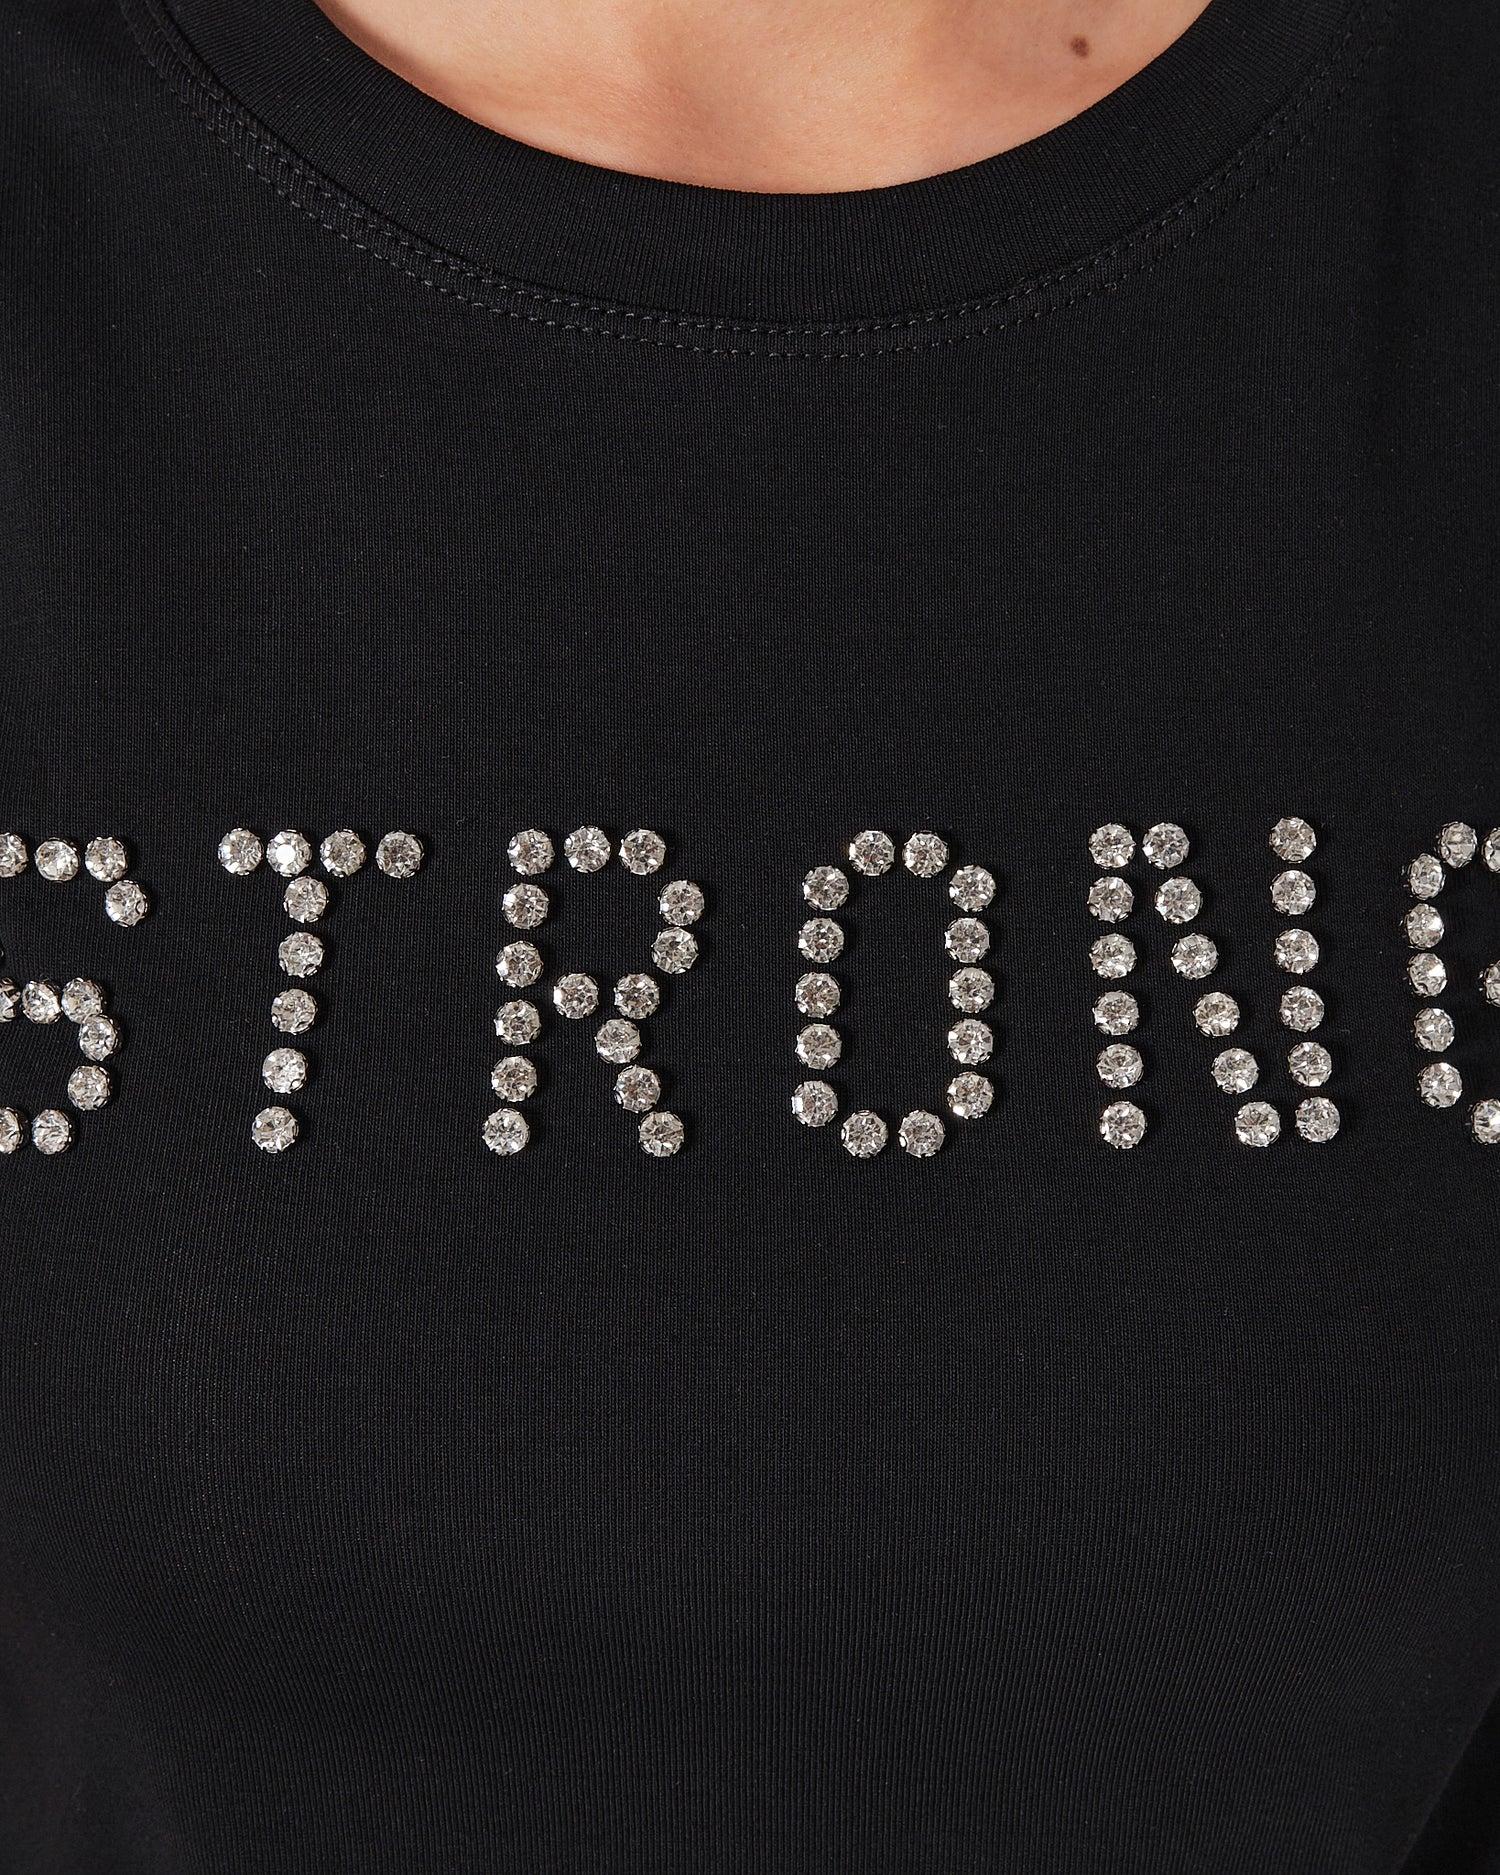 Strong Rhinestone Lady Black T-Shirt 11.90